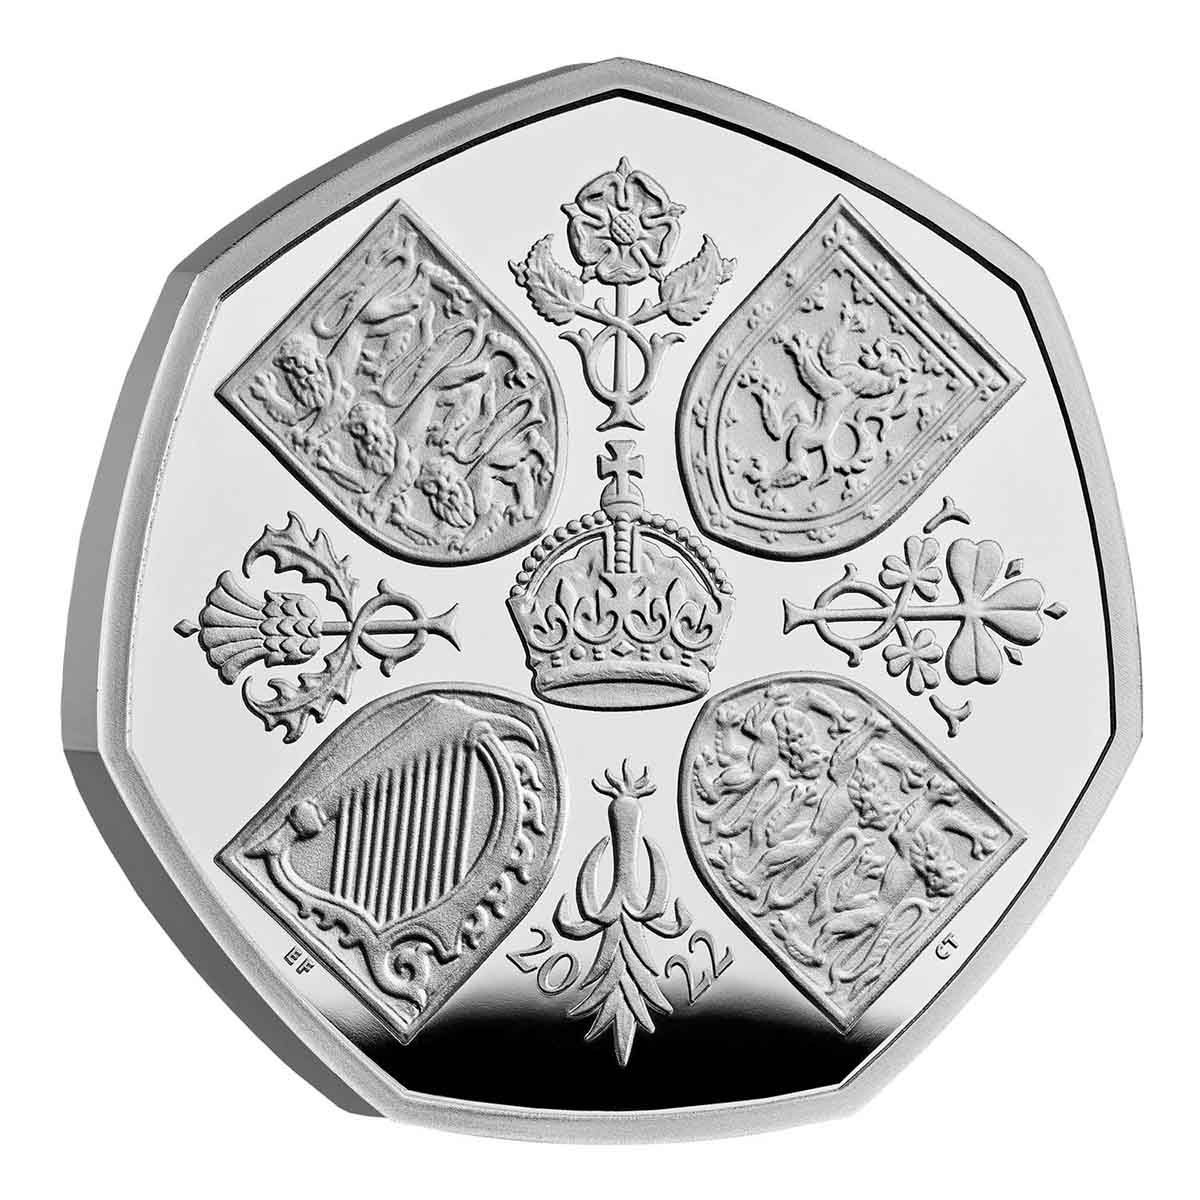 King Charles III 2022 50p Queen Elizabeth II Tribute Silver Proof Coin